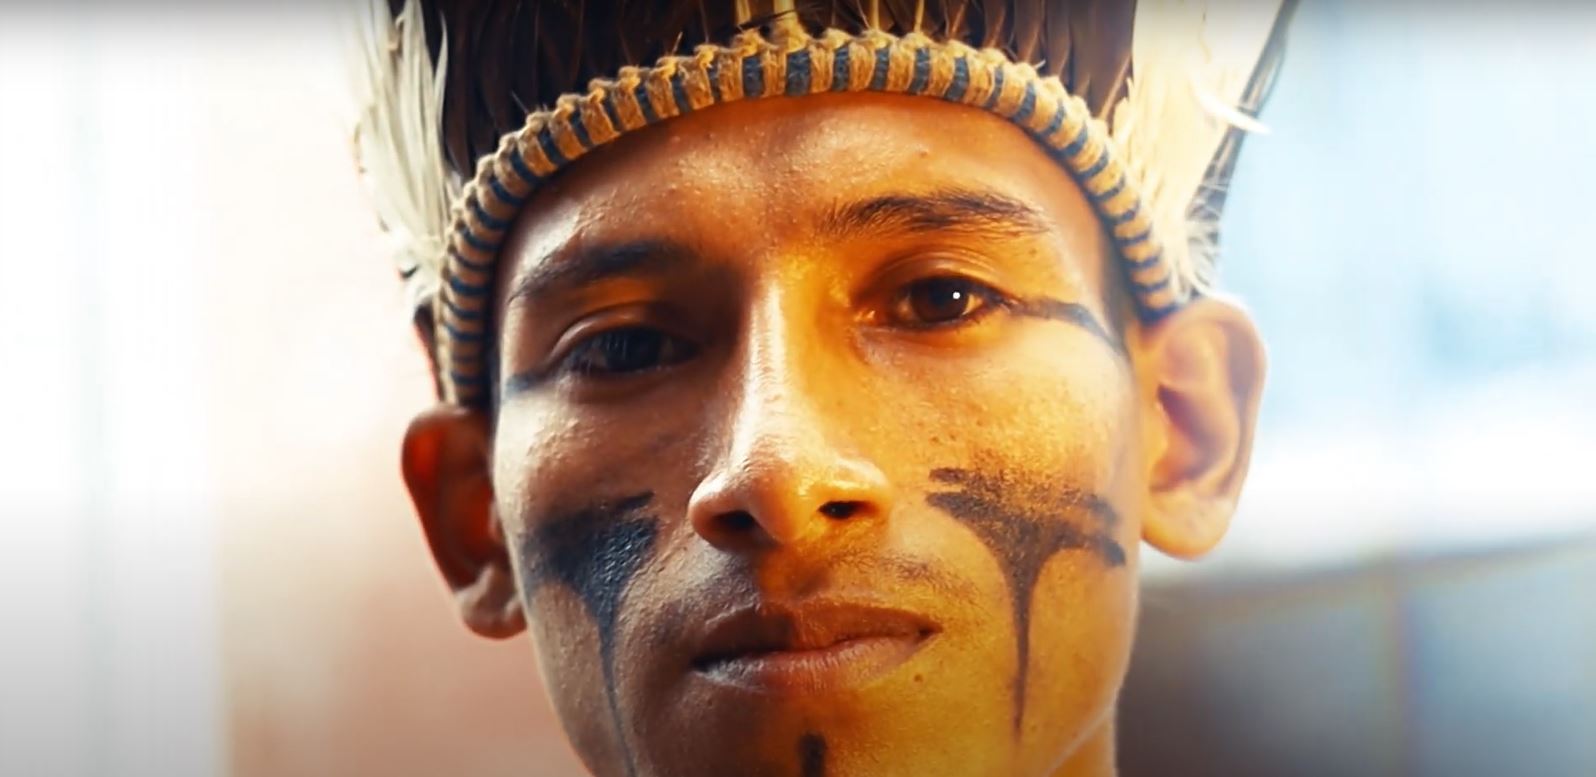 Photograph of Owerá, an Indigenous rapper.